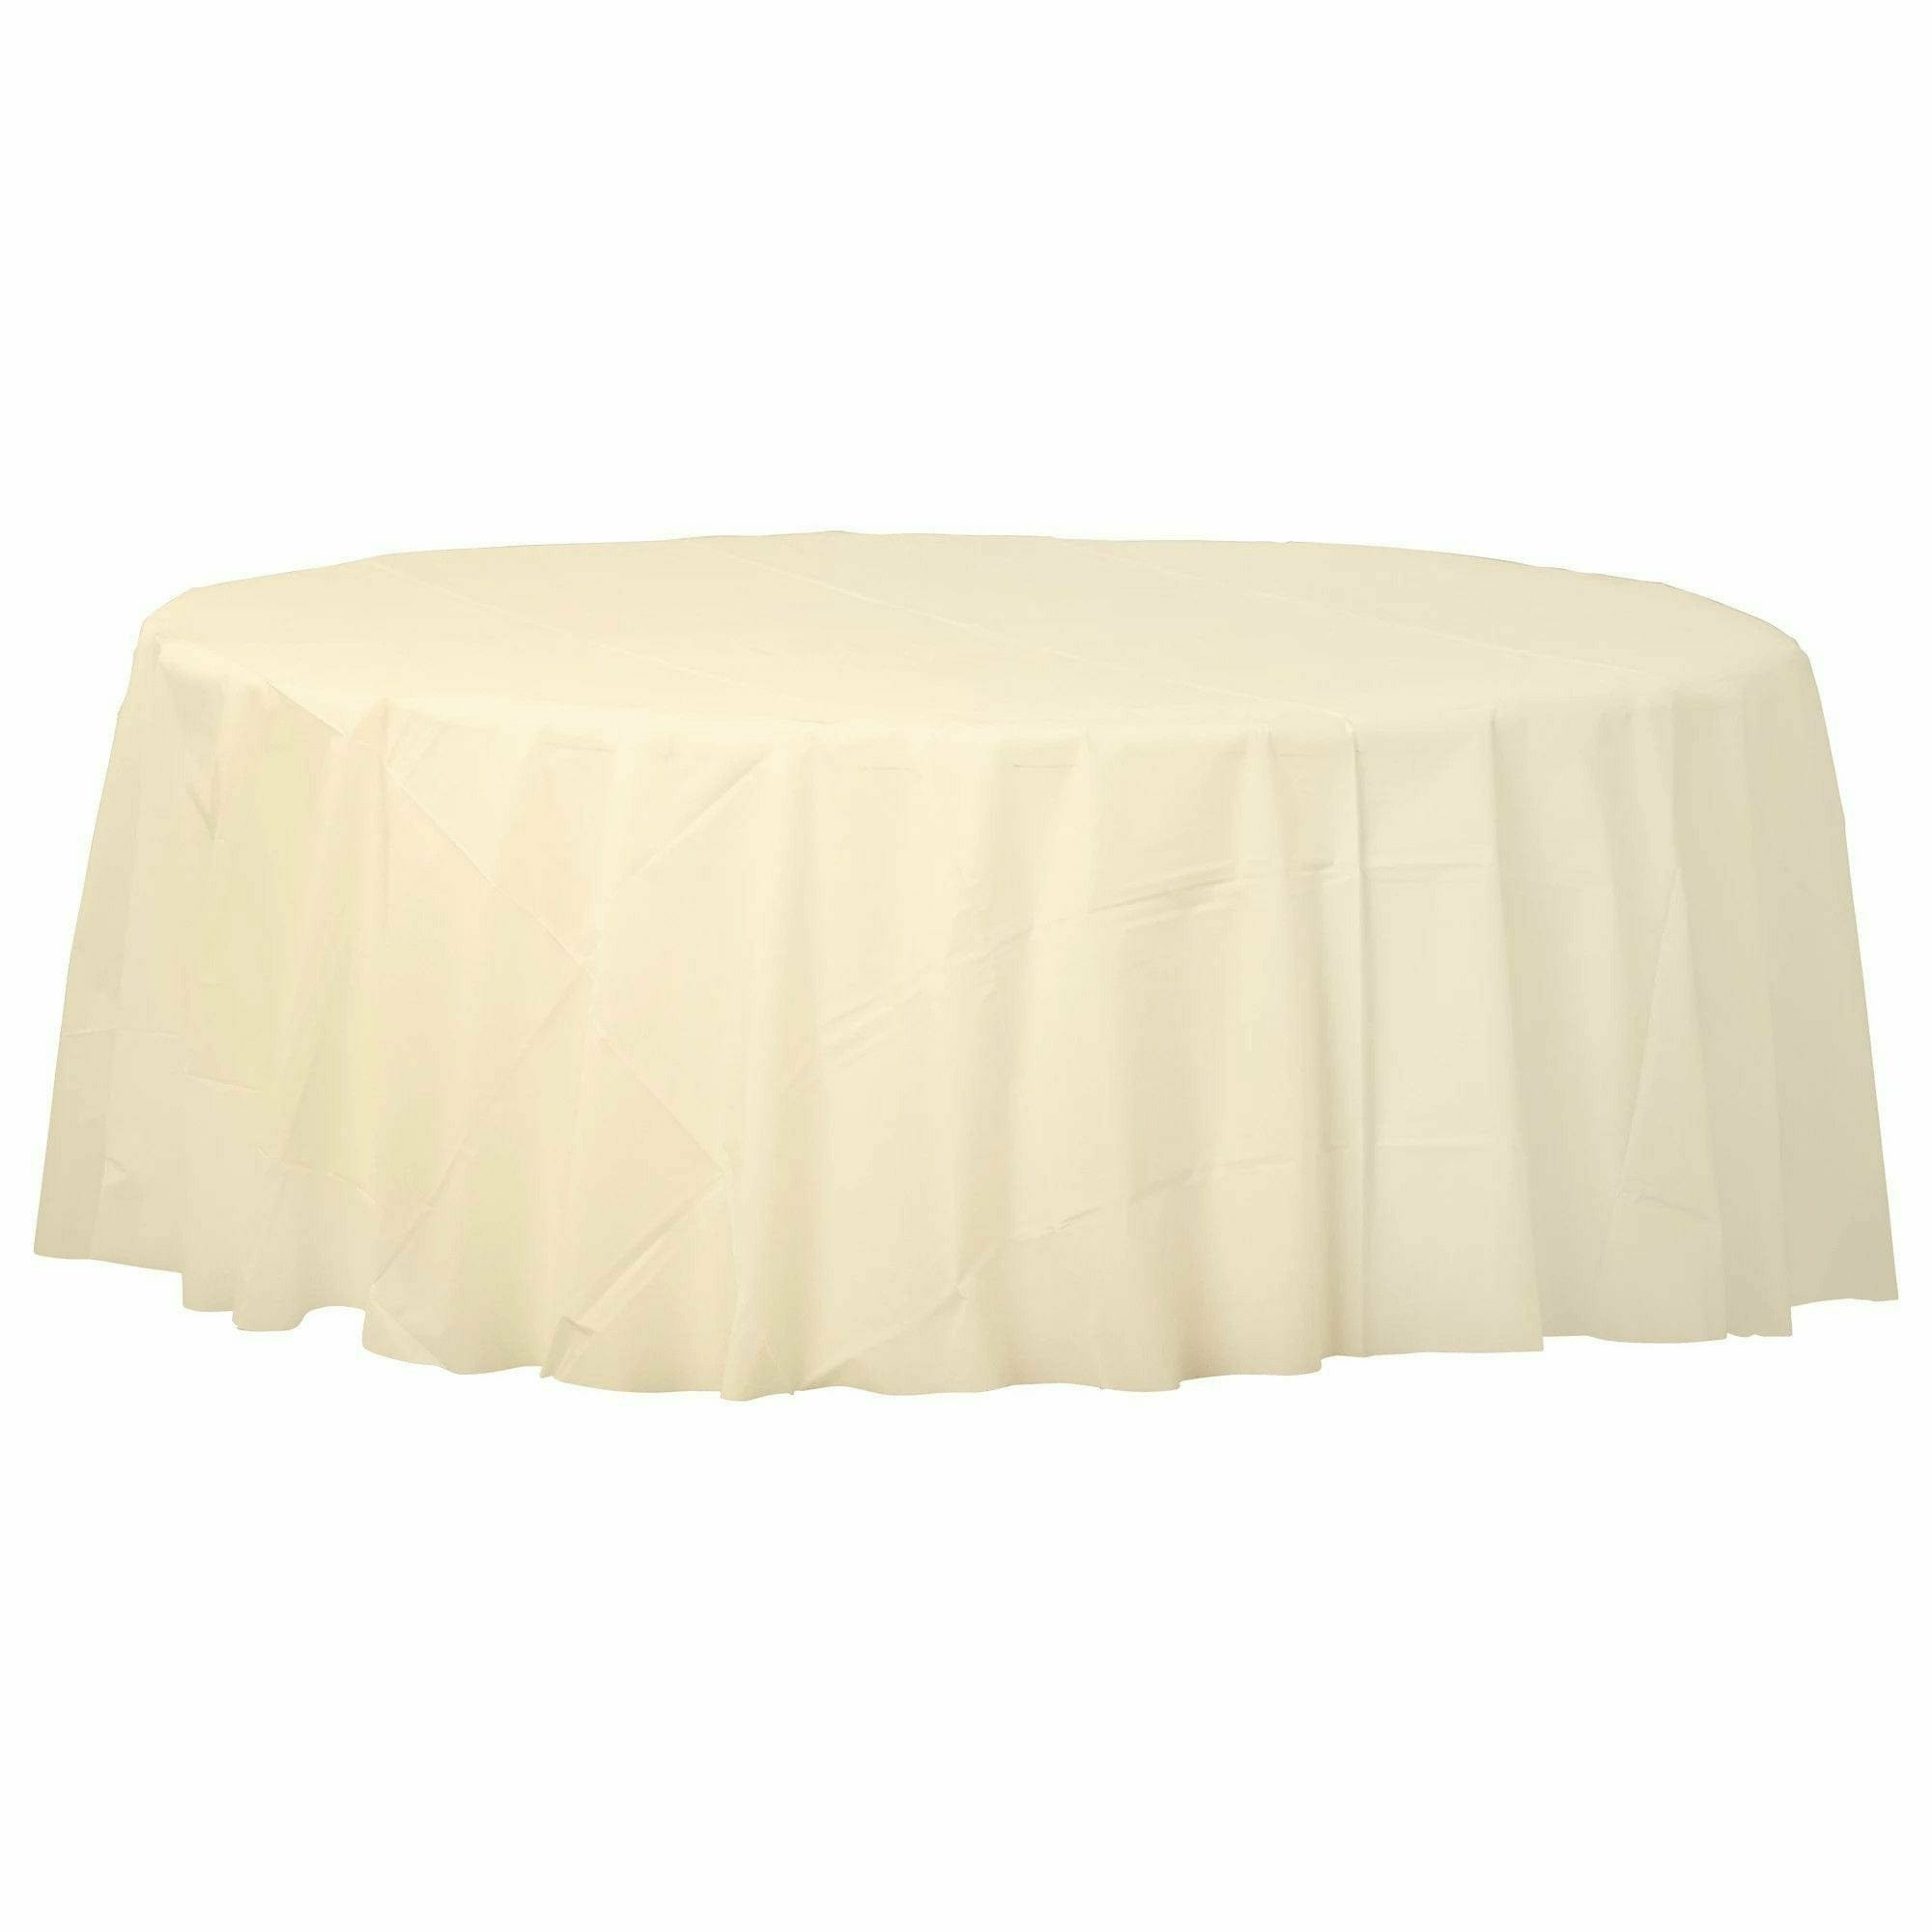 Amscan BASIC Vanilla Creme - 84" Round Plastic Table Cover